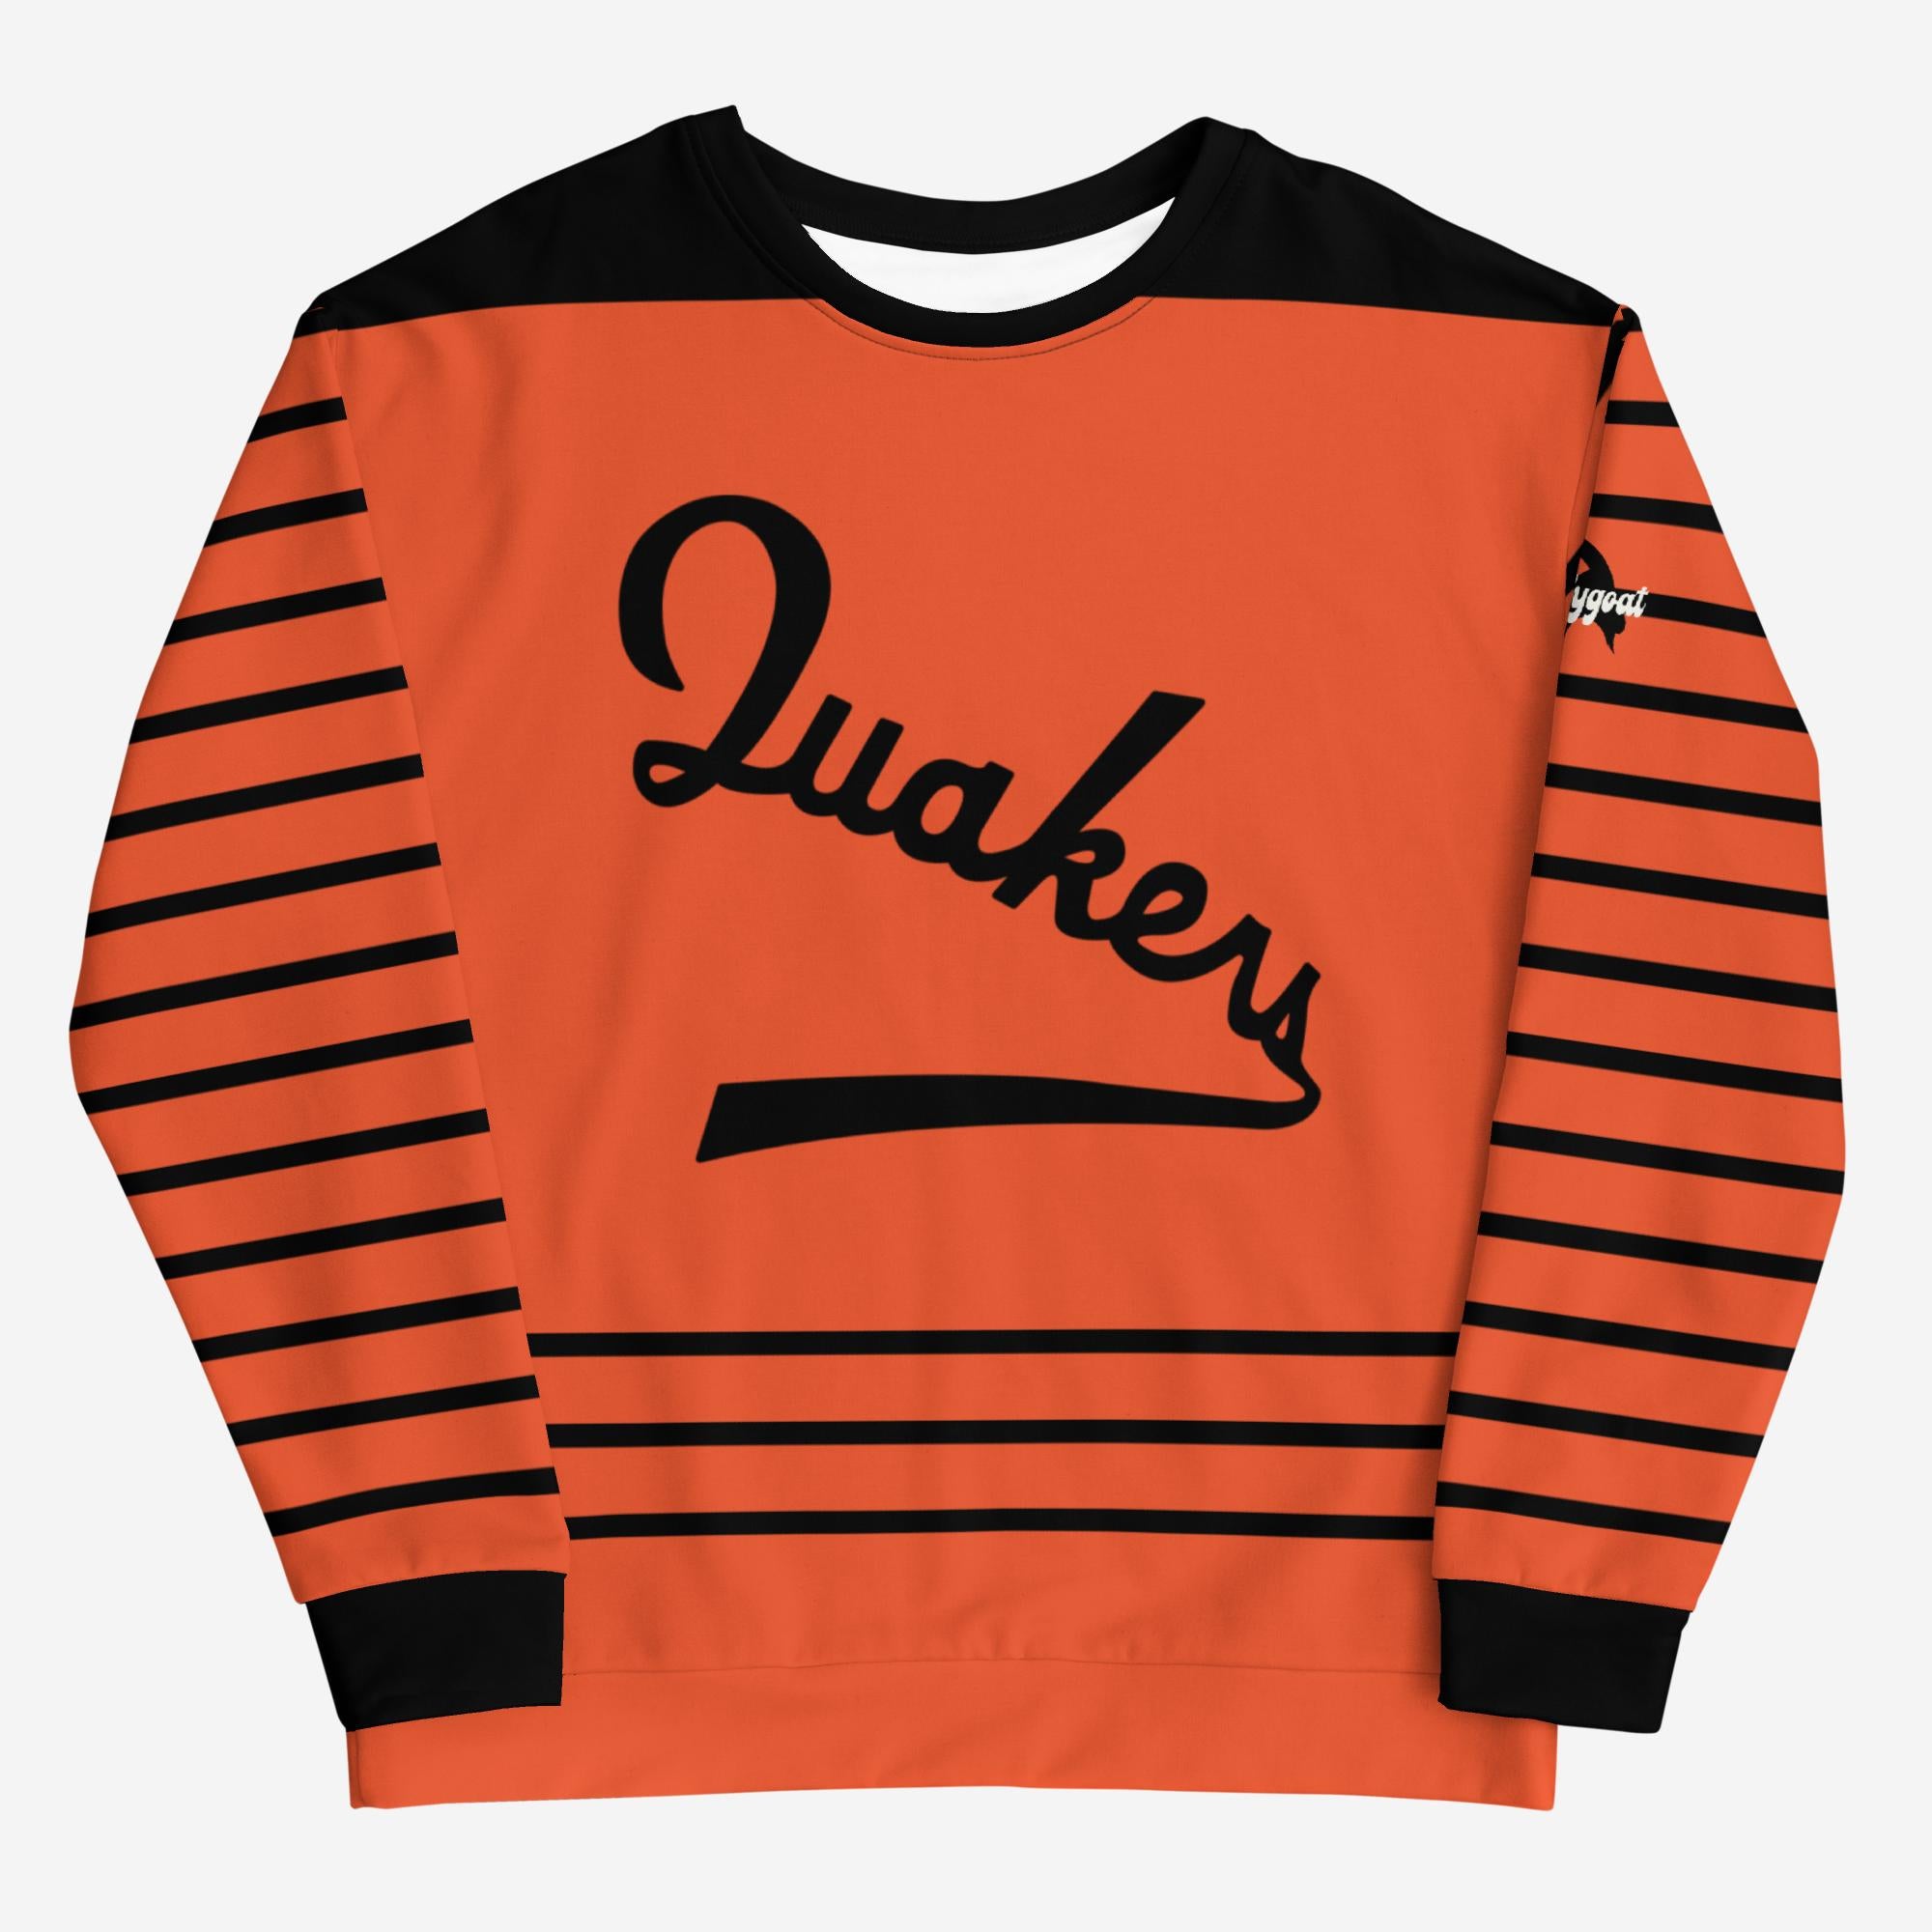 "Philadelphia Quakers" All-Over Sweatshirt